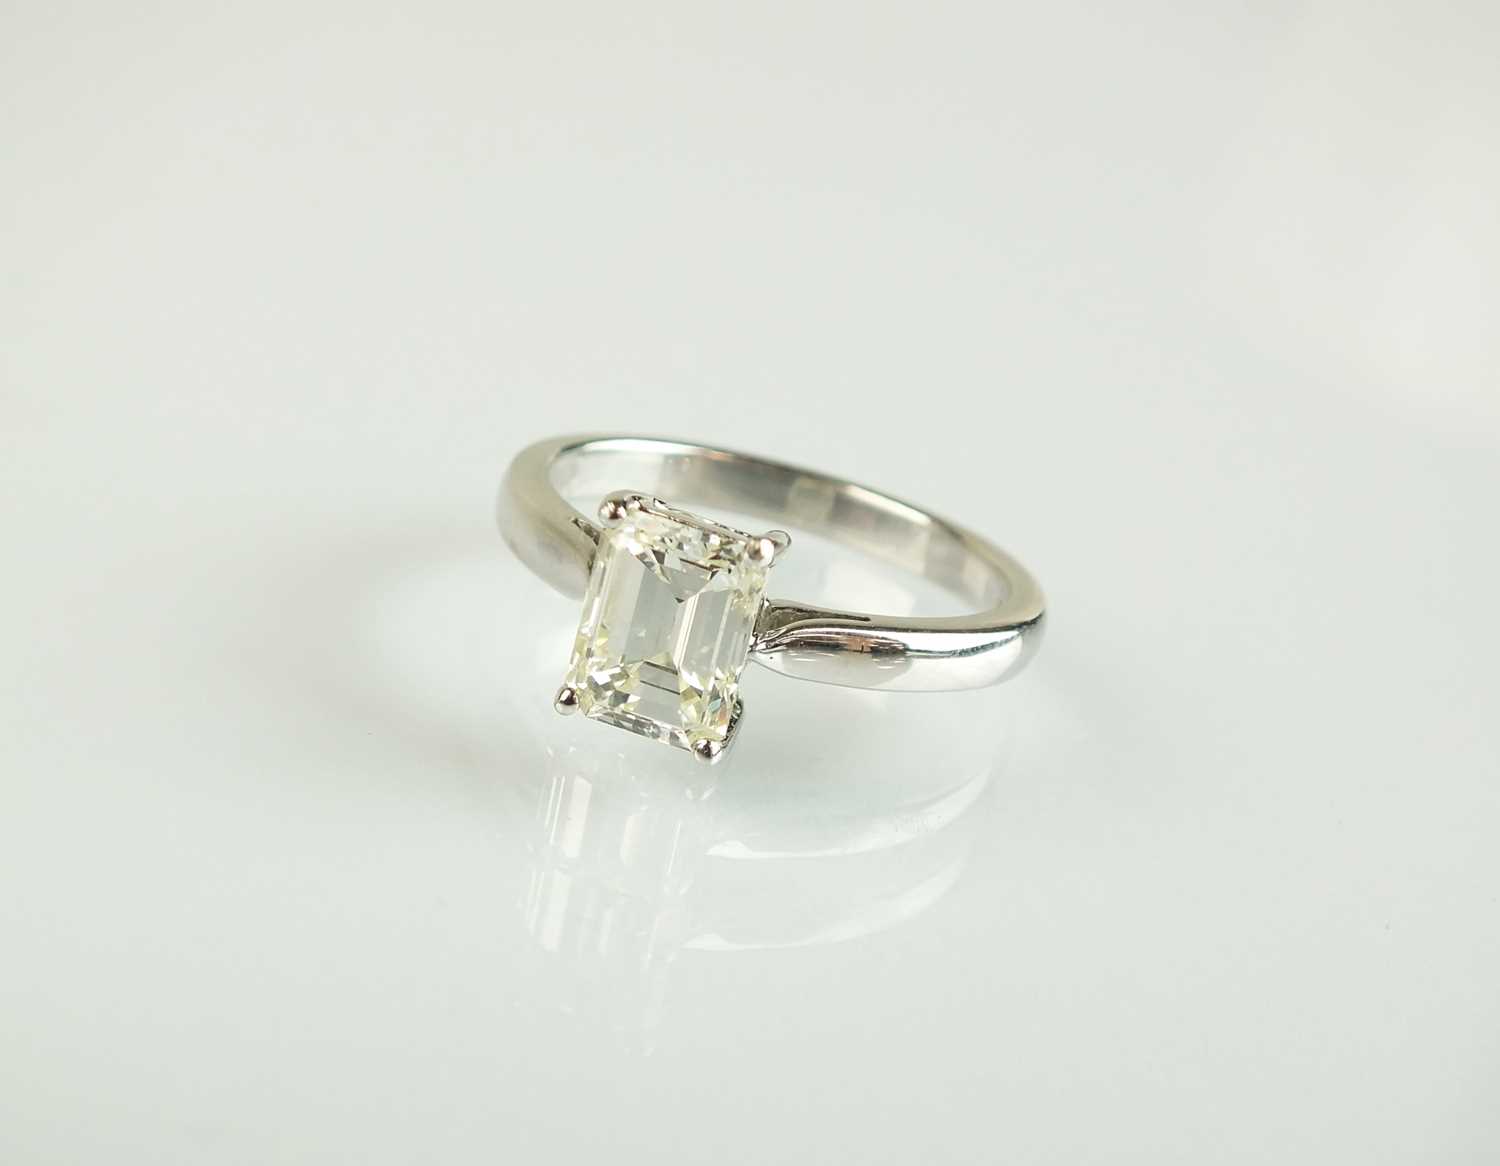 Lot 79 - An 18ct white gold single stone diamond ring